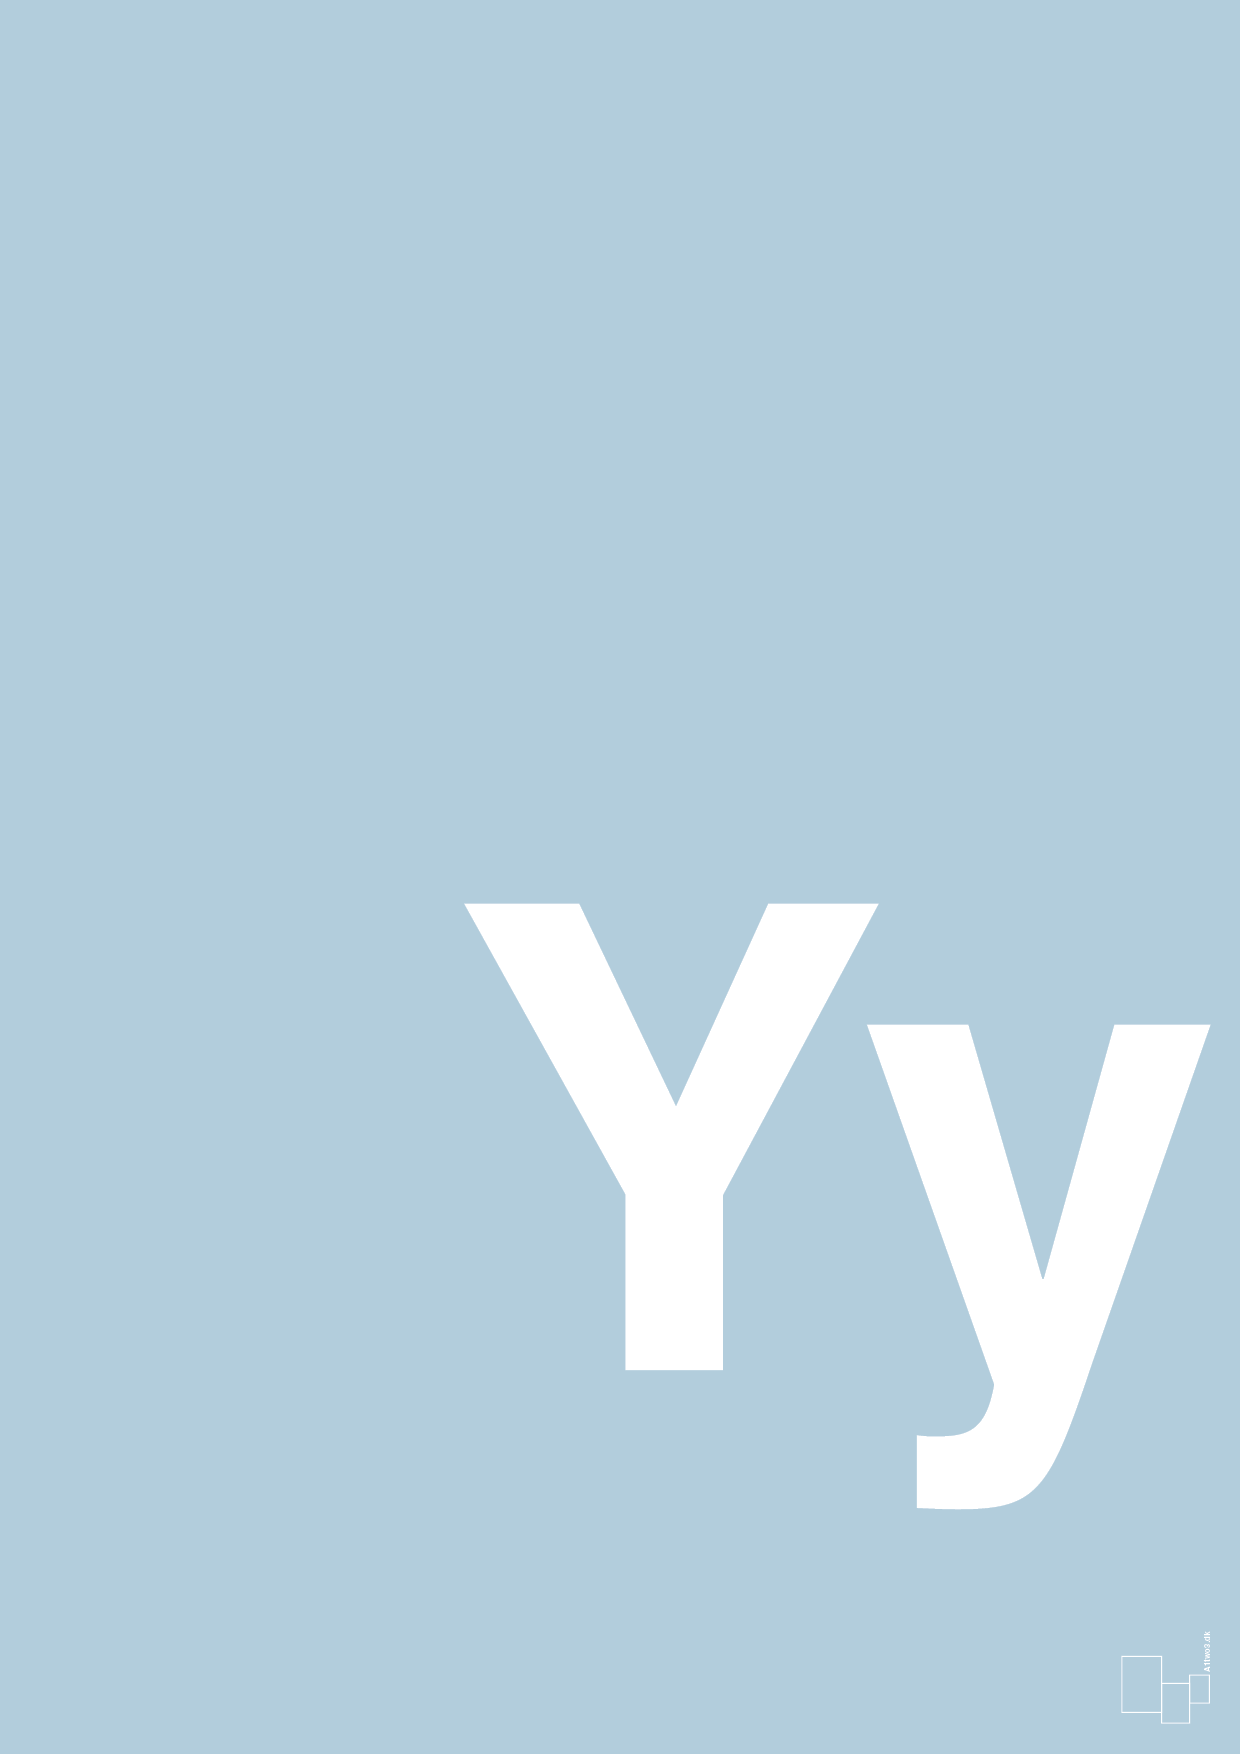 bogstav yy - Plakat med Bogstaver i Heavenly Blue